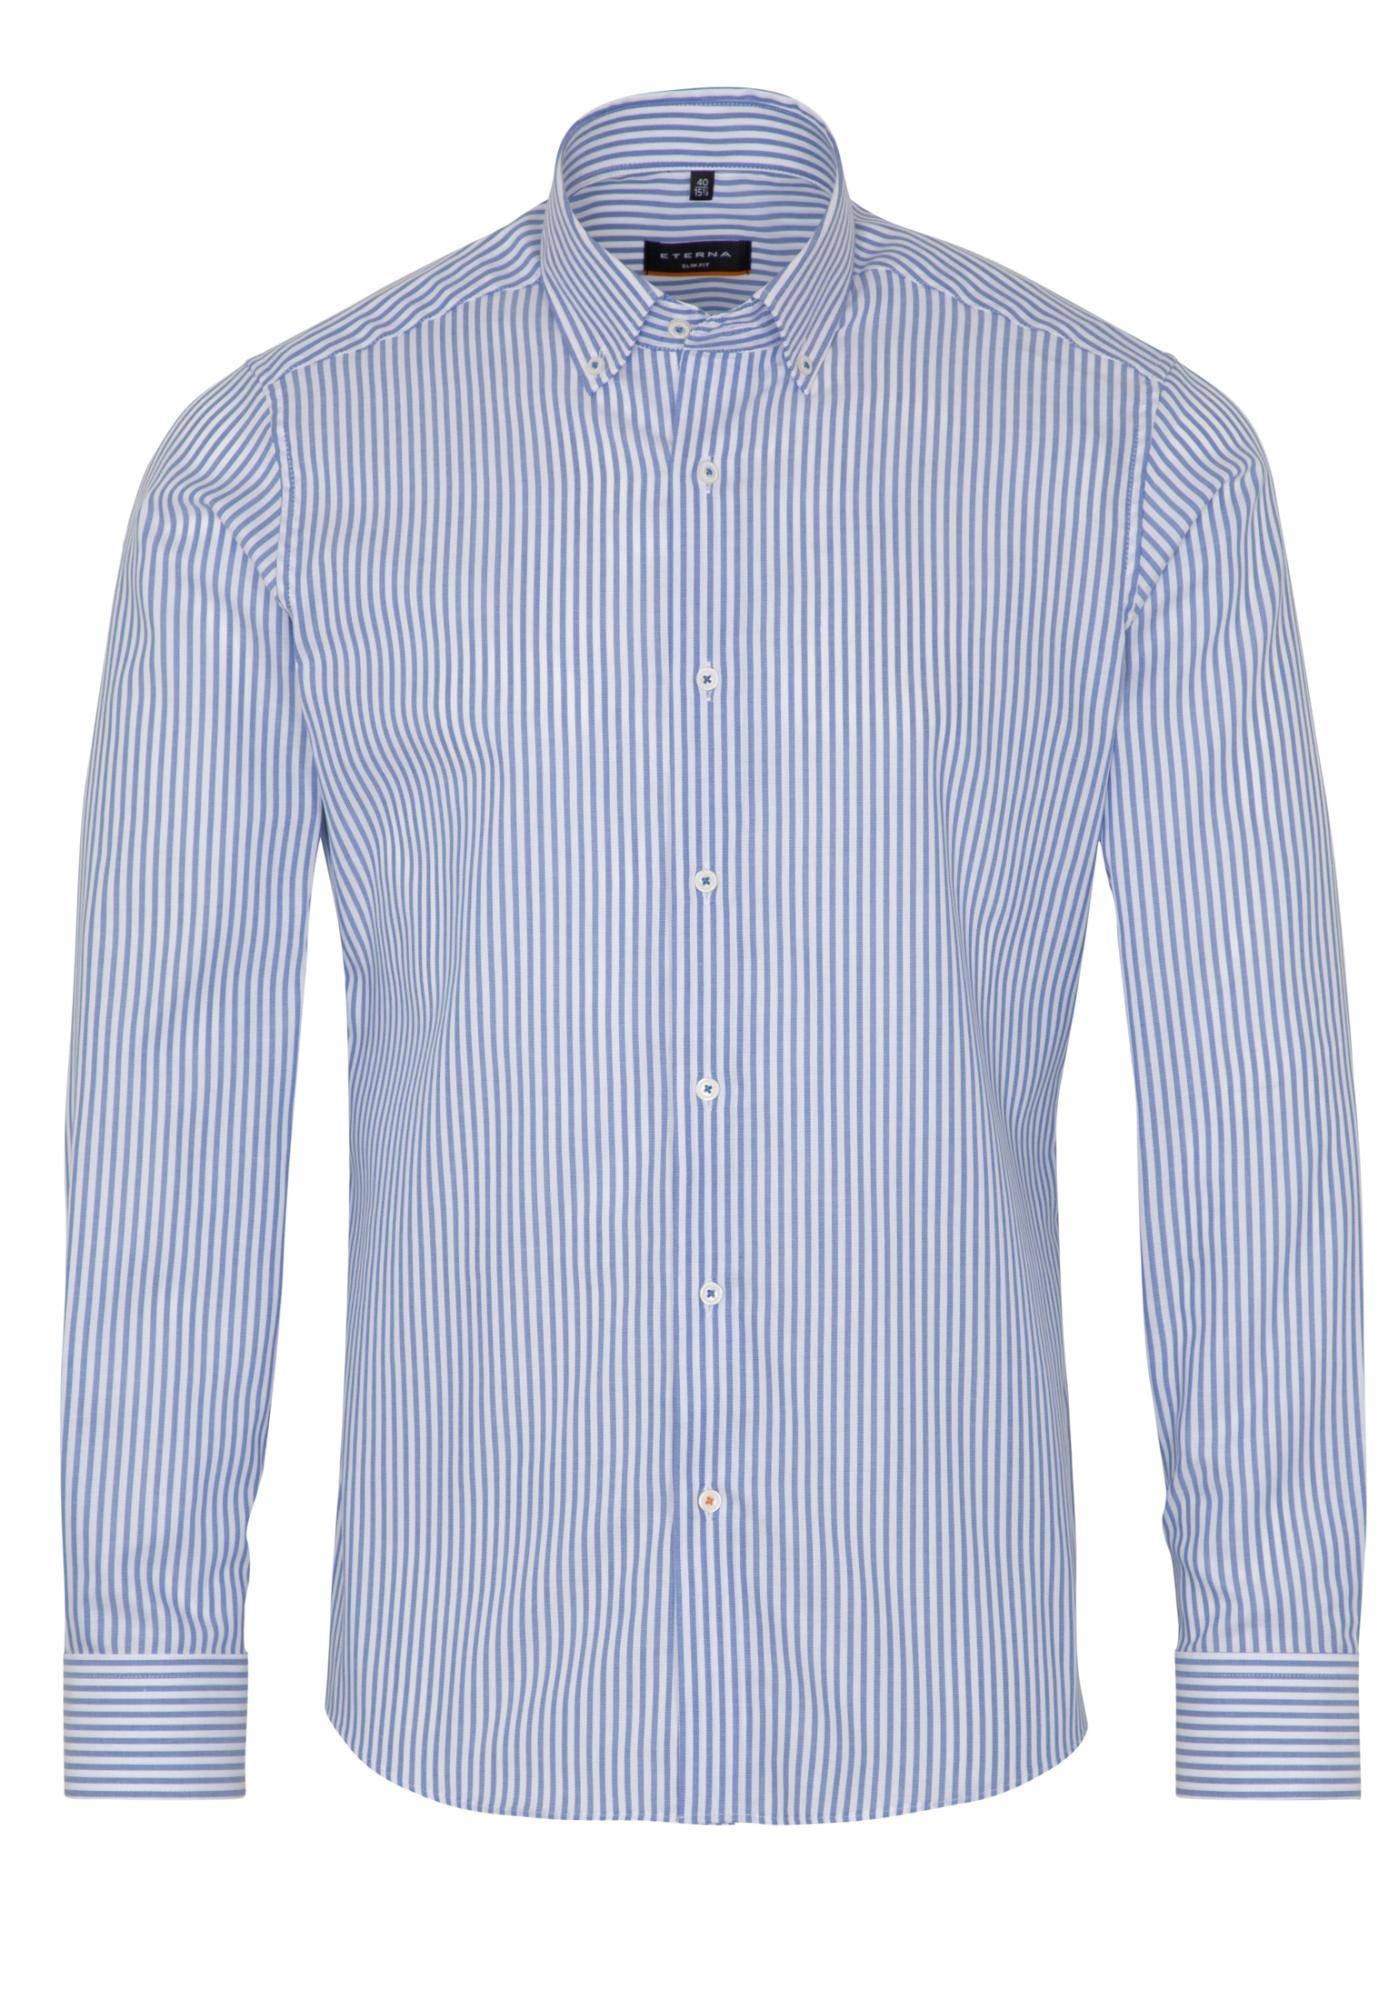 Мужская рубашка ETERNA, синяя, цвет синий, размер 42 - фото 1